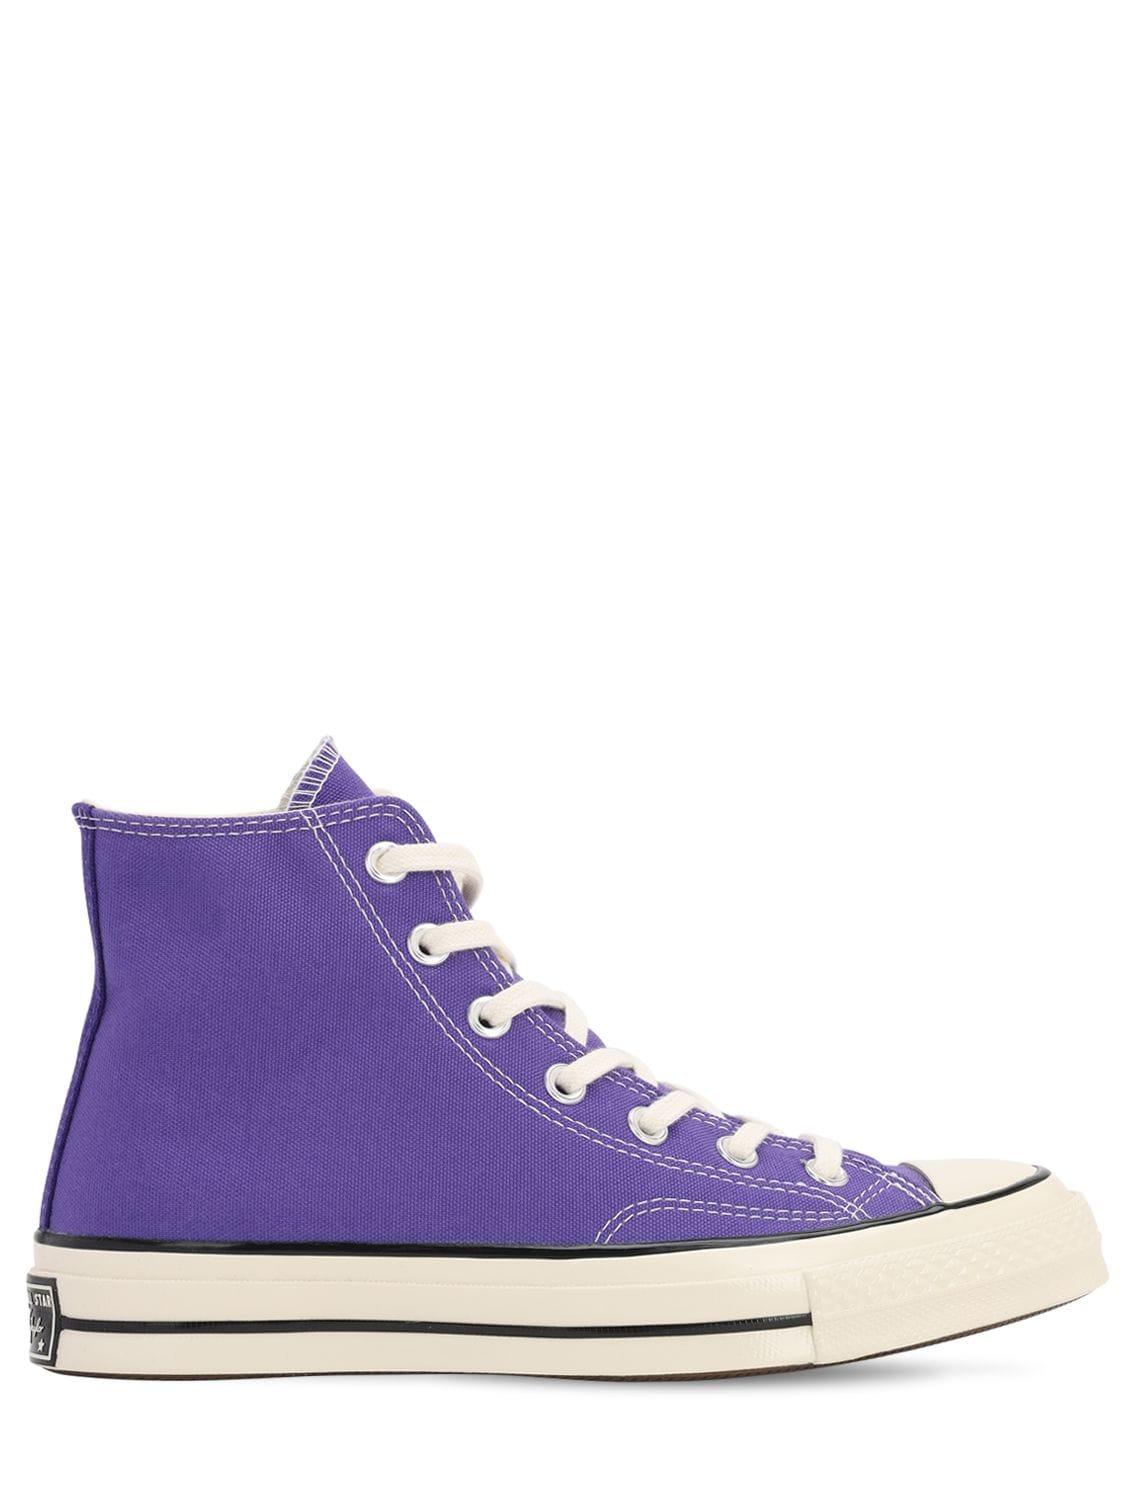 Converse Purple Chuck 70 High Sneakers | Lyst Australia